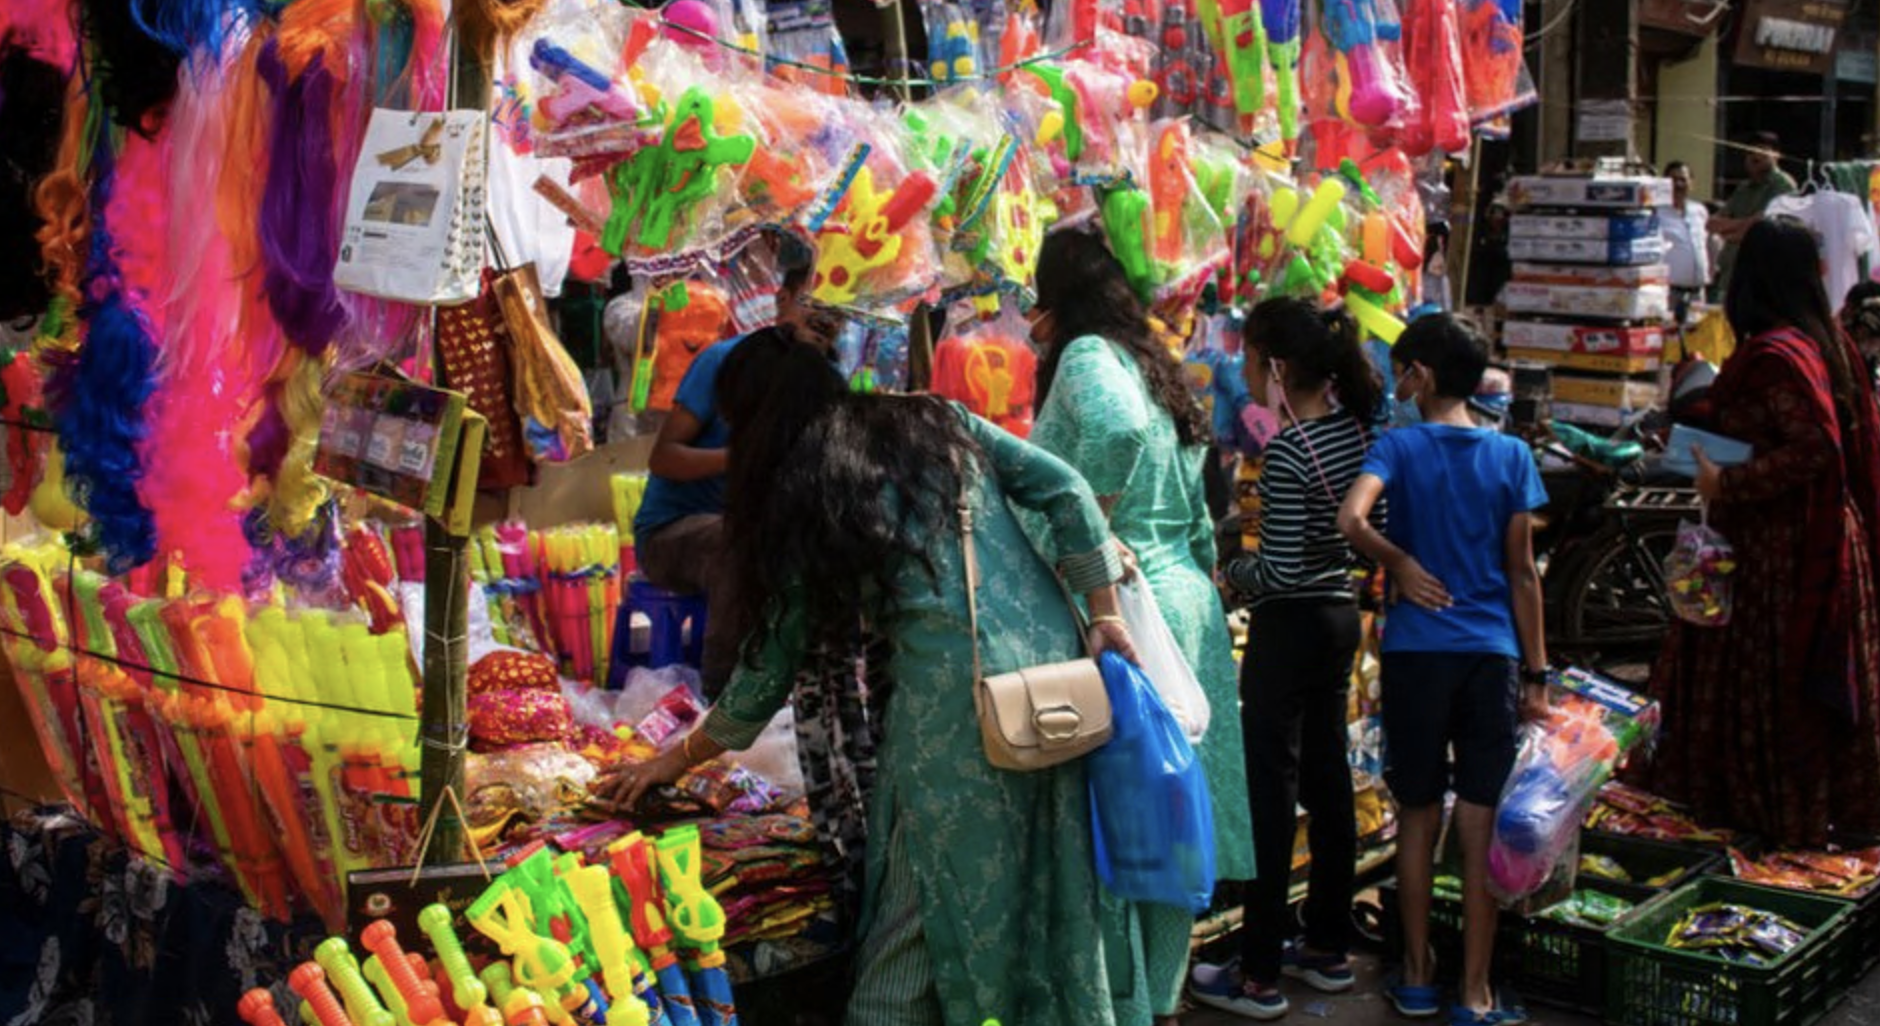 Street vendor selling Pichkari (Water gun) and other Holi celebration items at a market